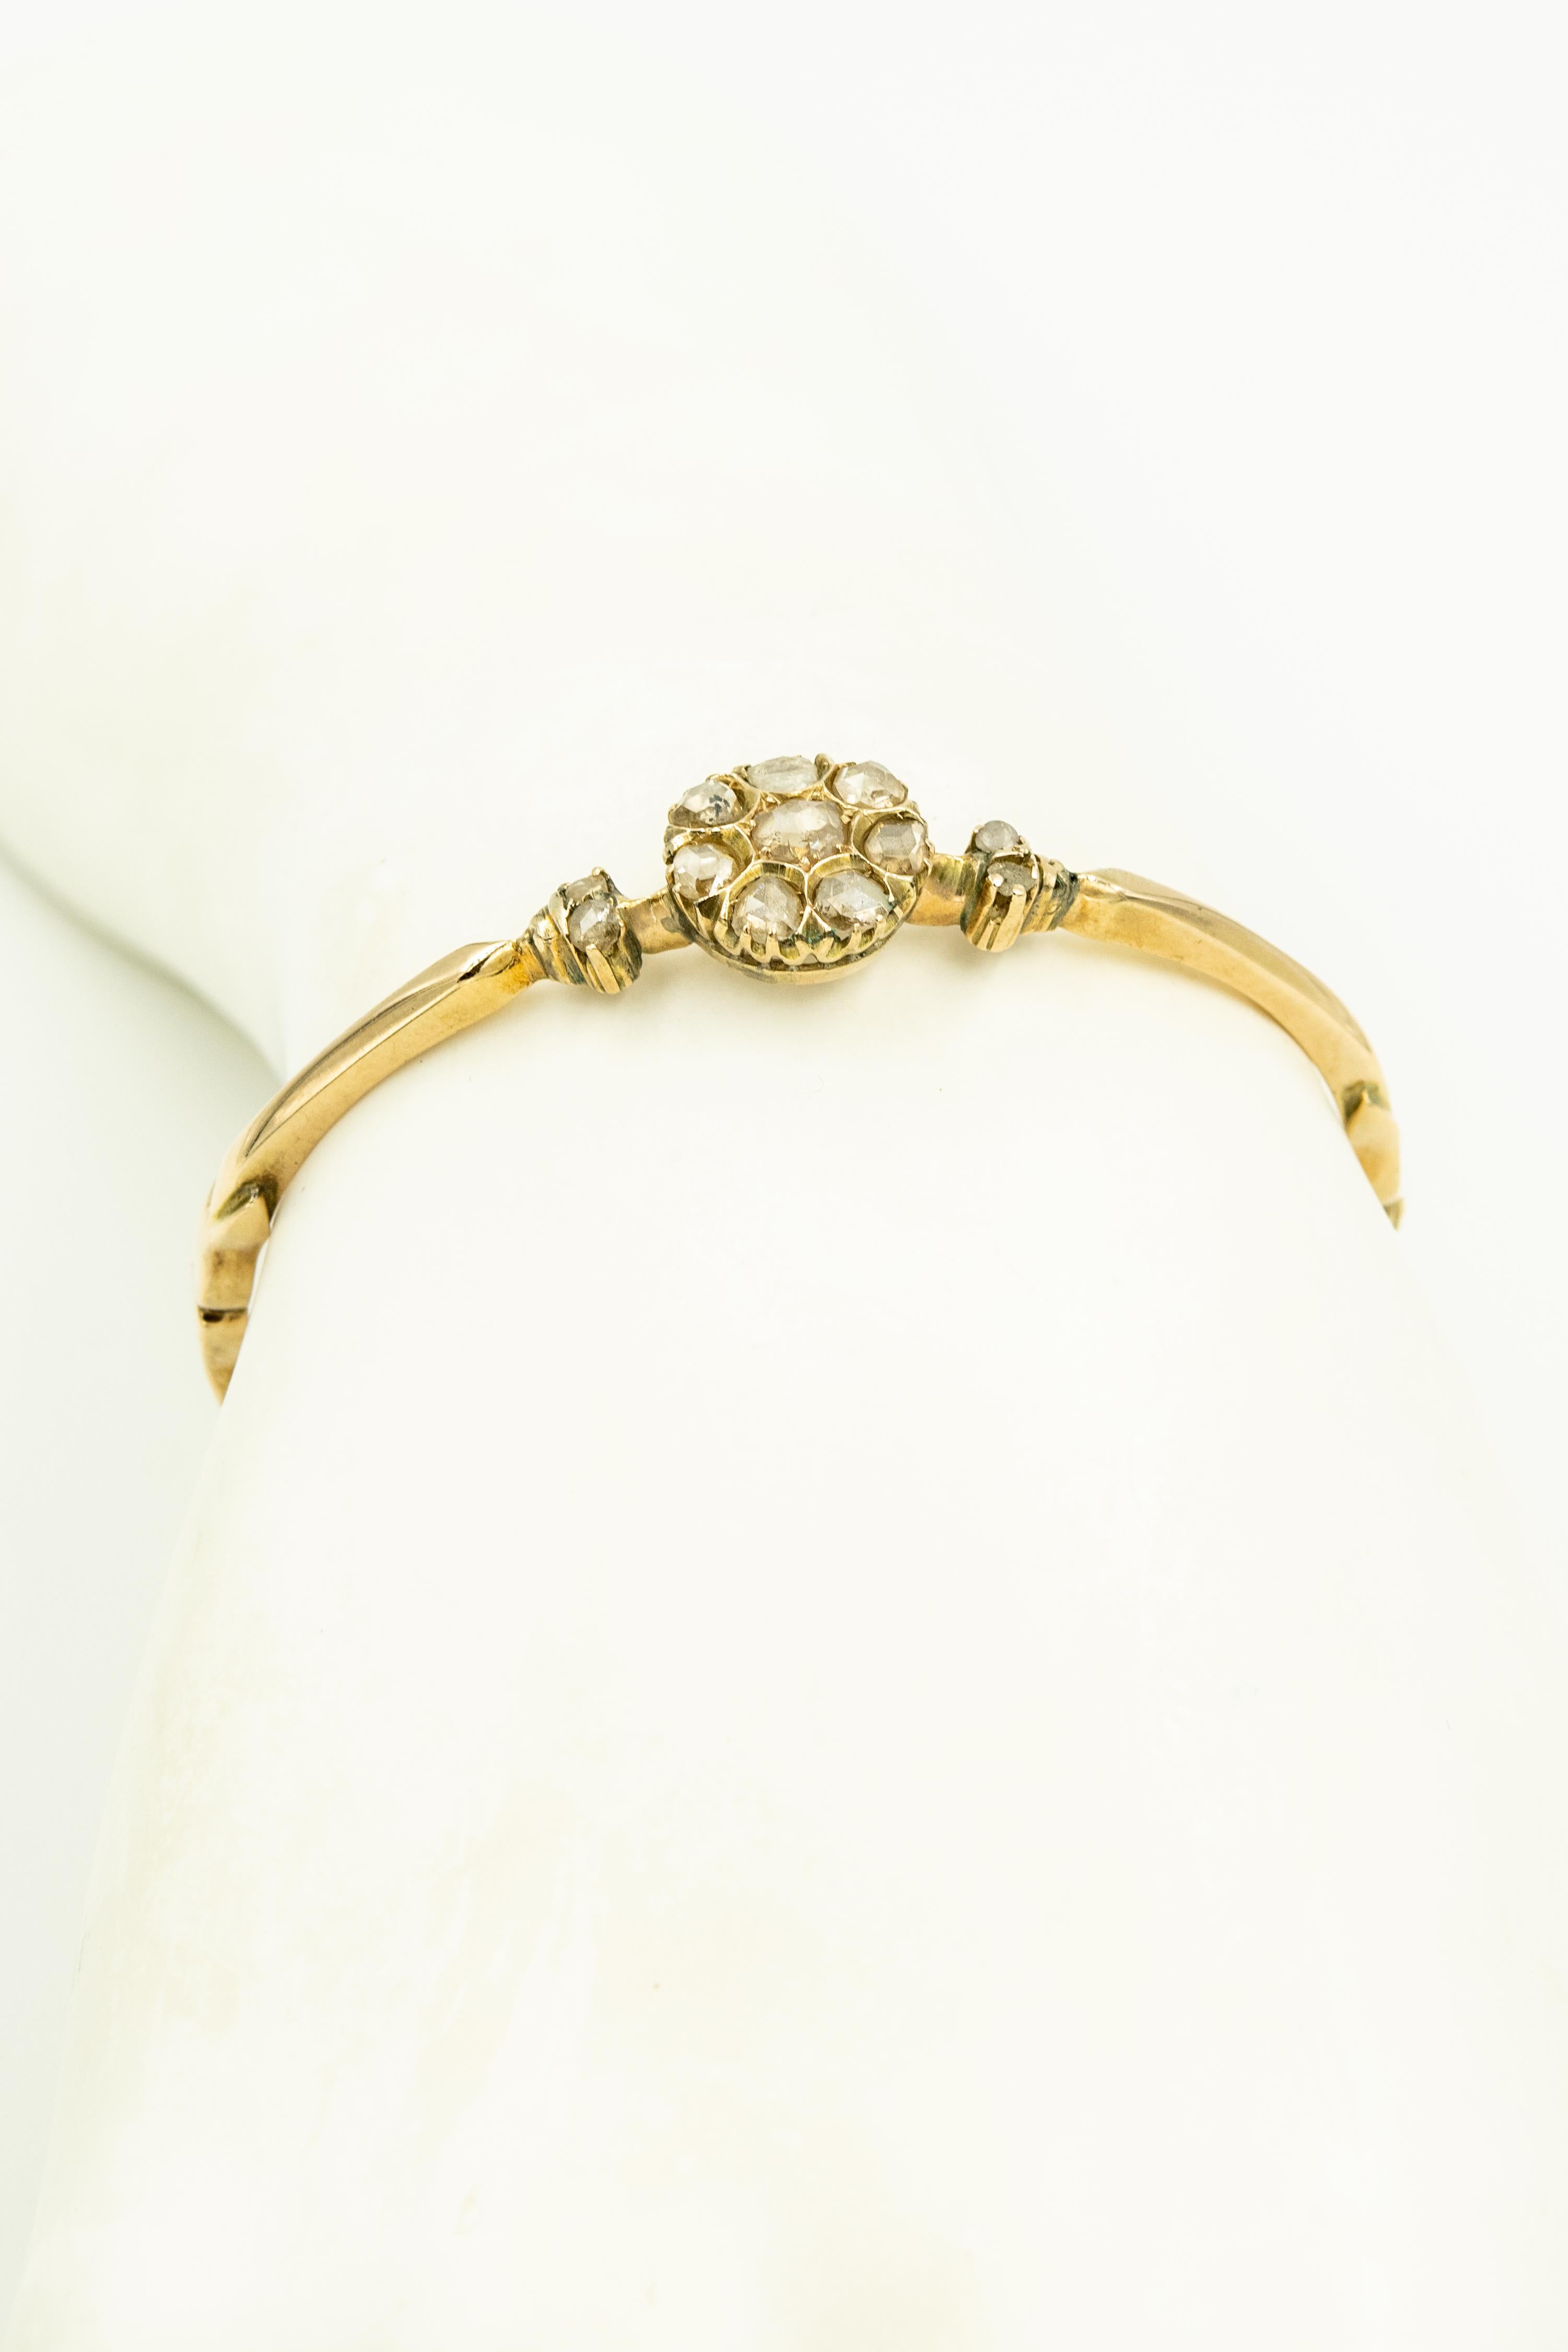 Antique Victorian Floral Rose Cut Diamond Gold Bangle Bracelet For Sale 1